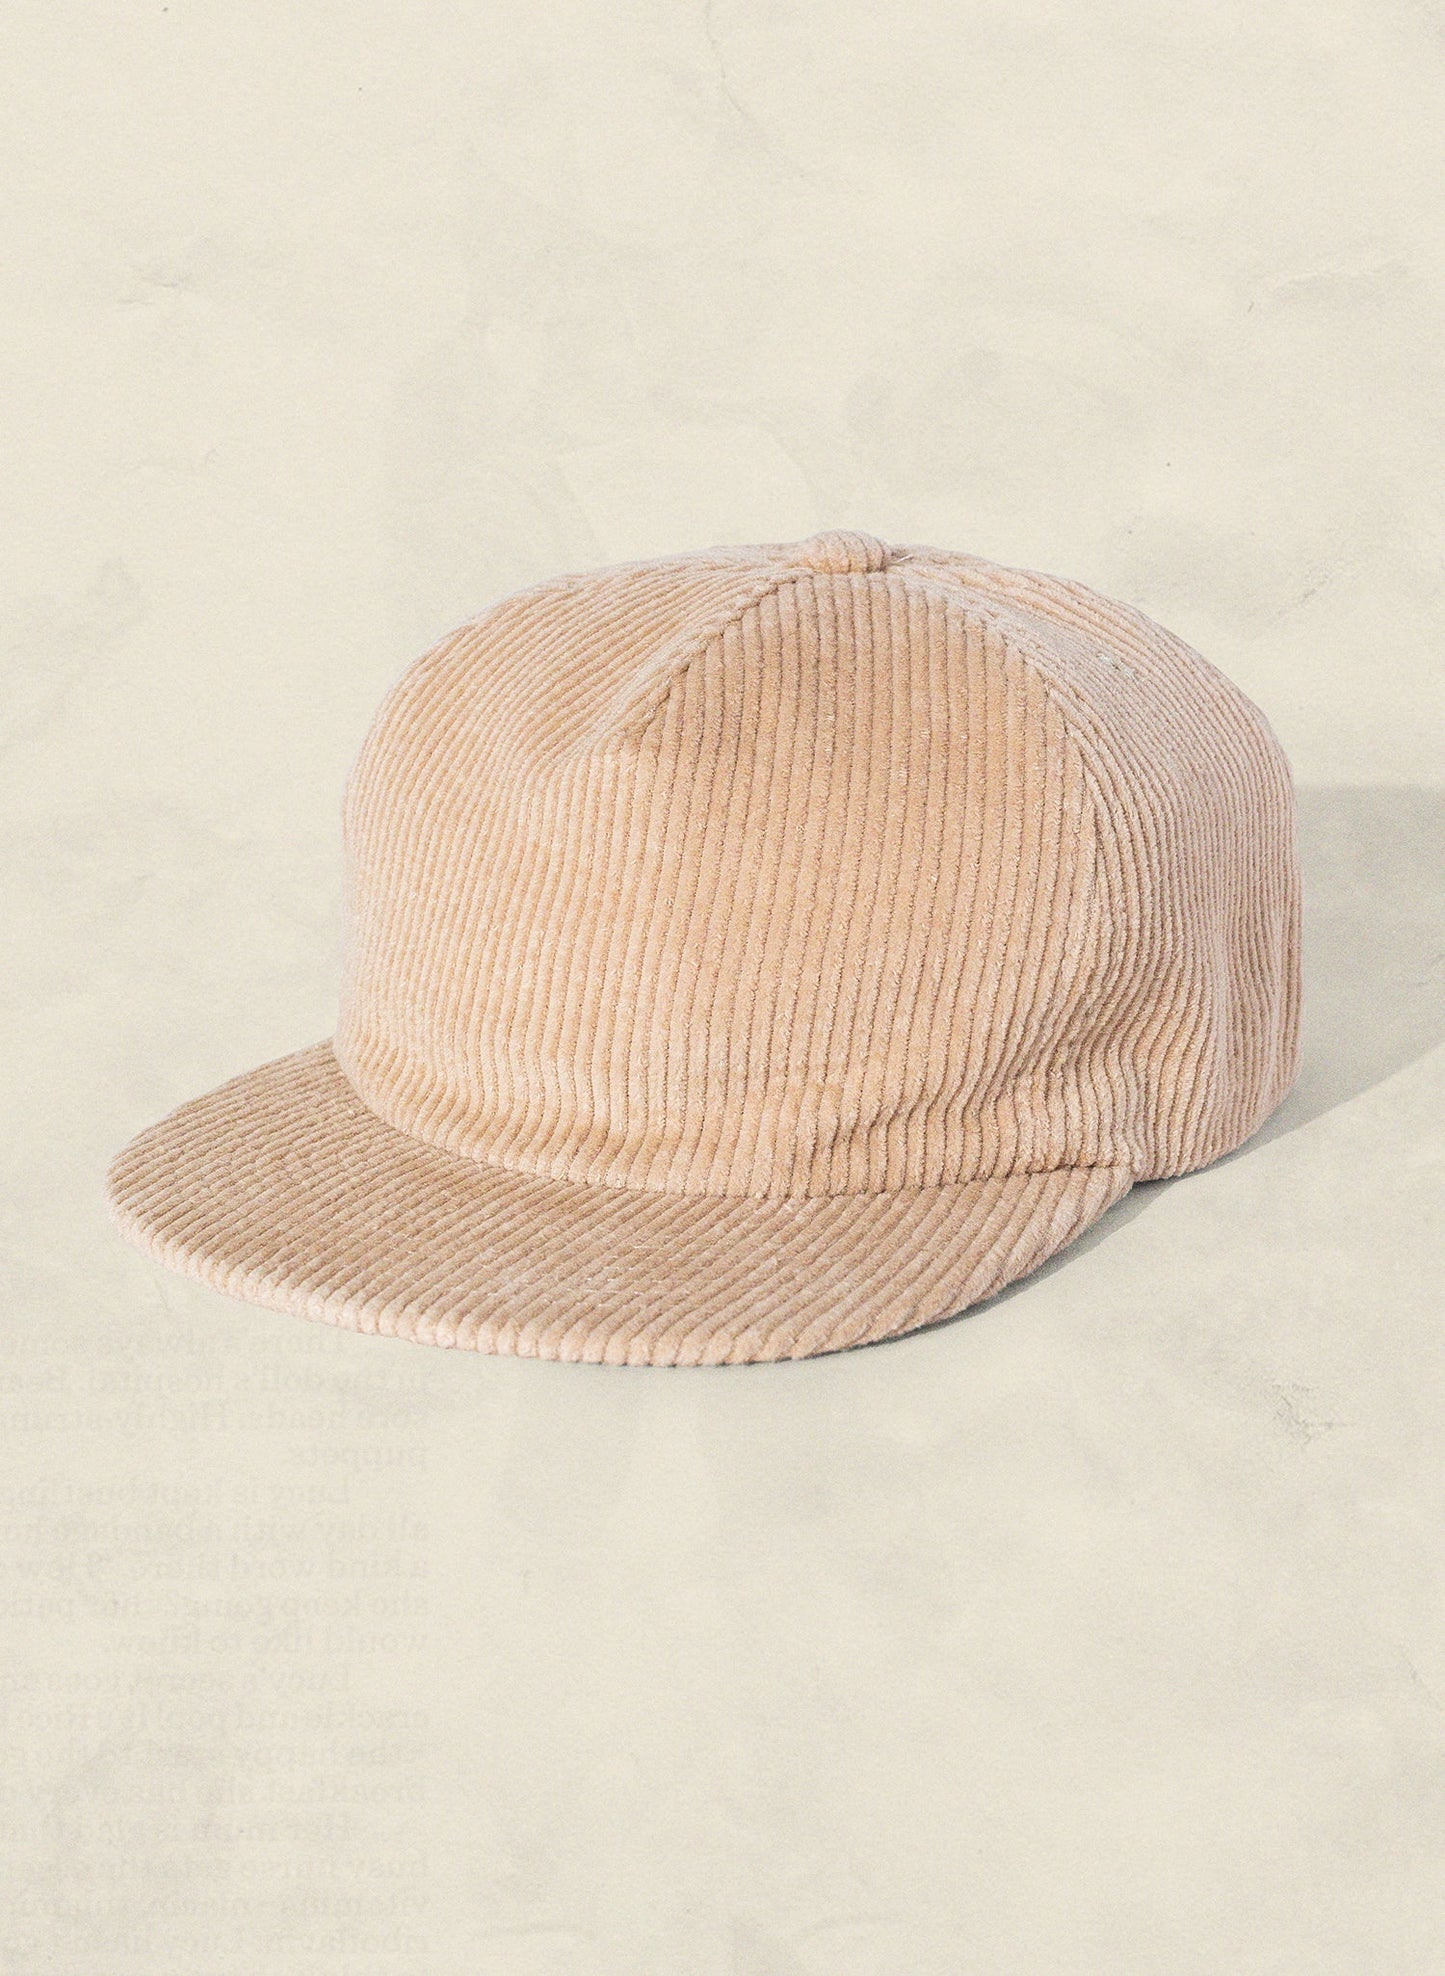 Weld Mfg Field Trip Hat - Unstructured 5 panel corduroy strapback hat, vintage inspired baseball hat, cream